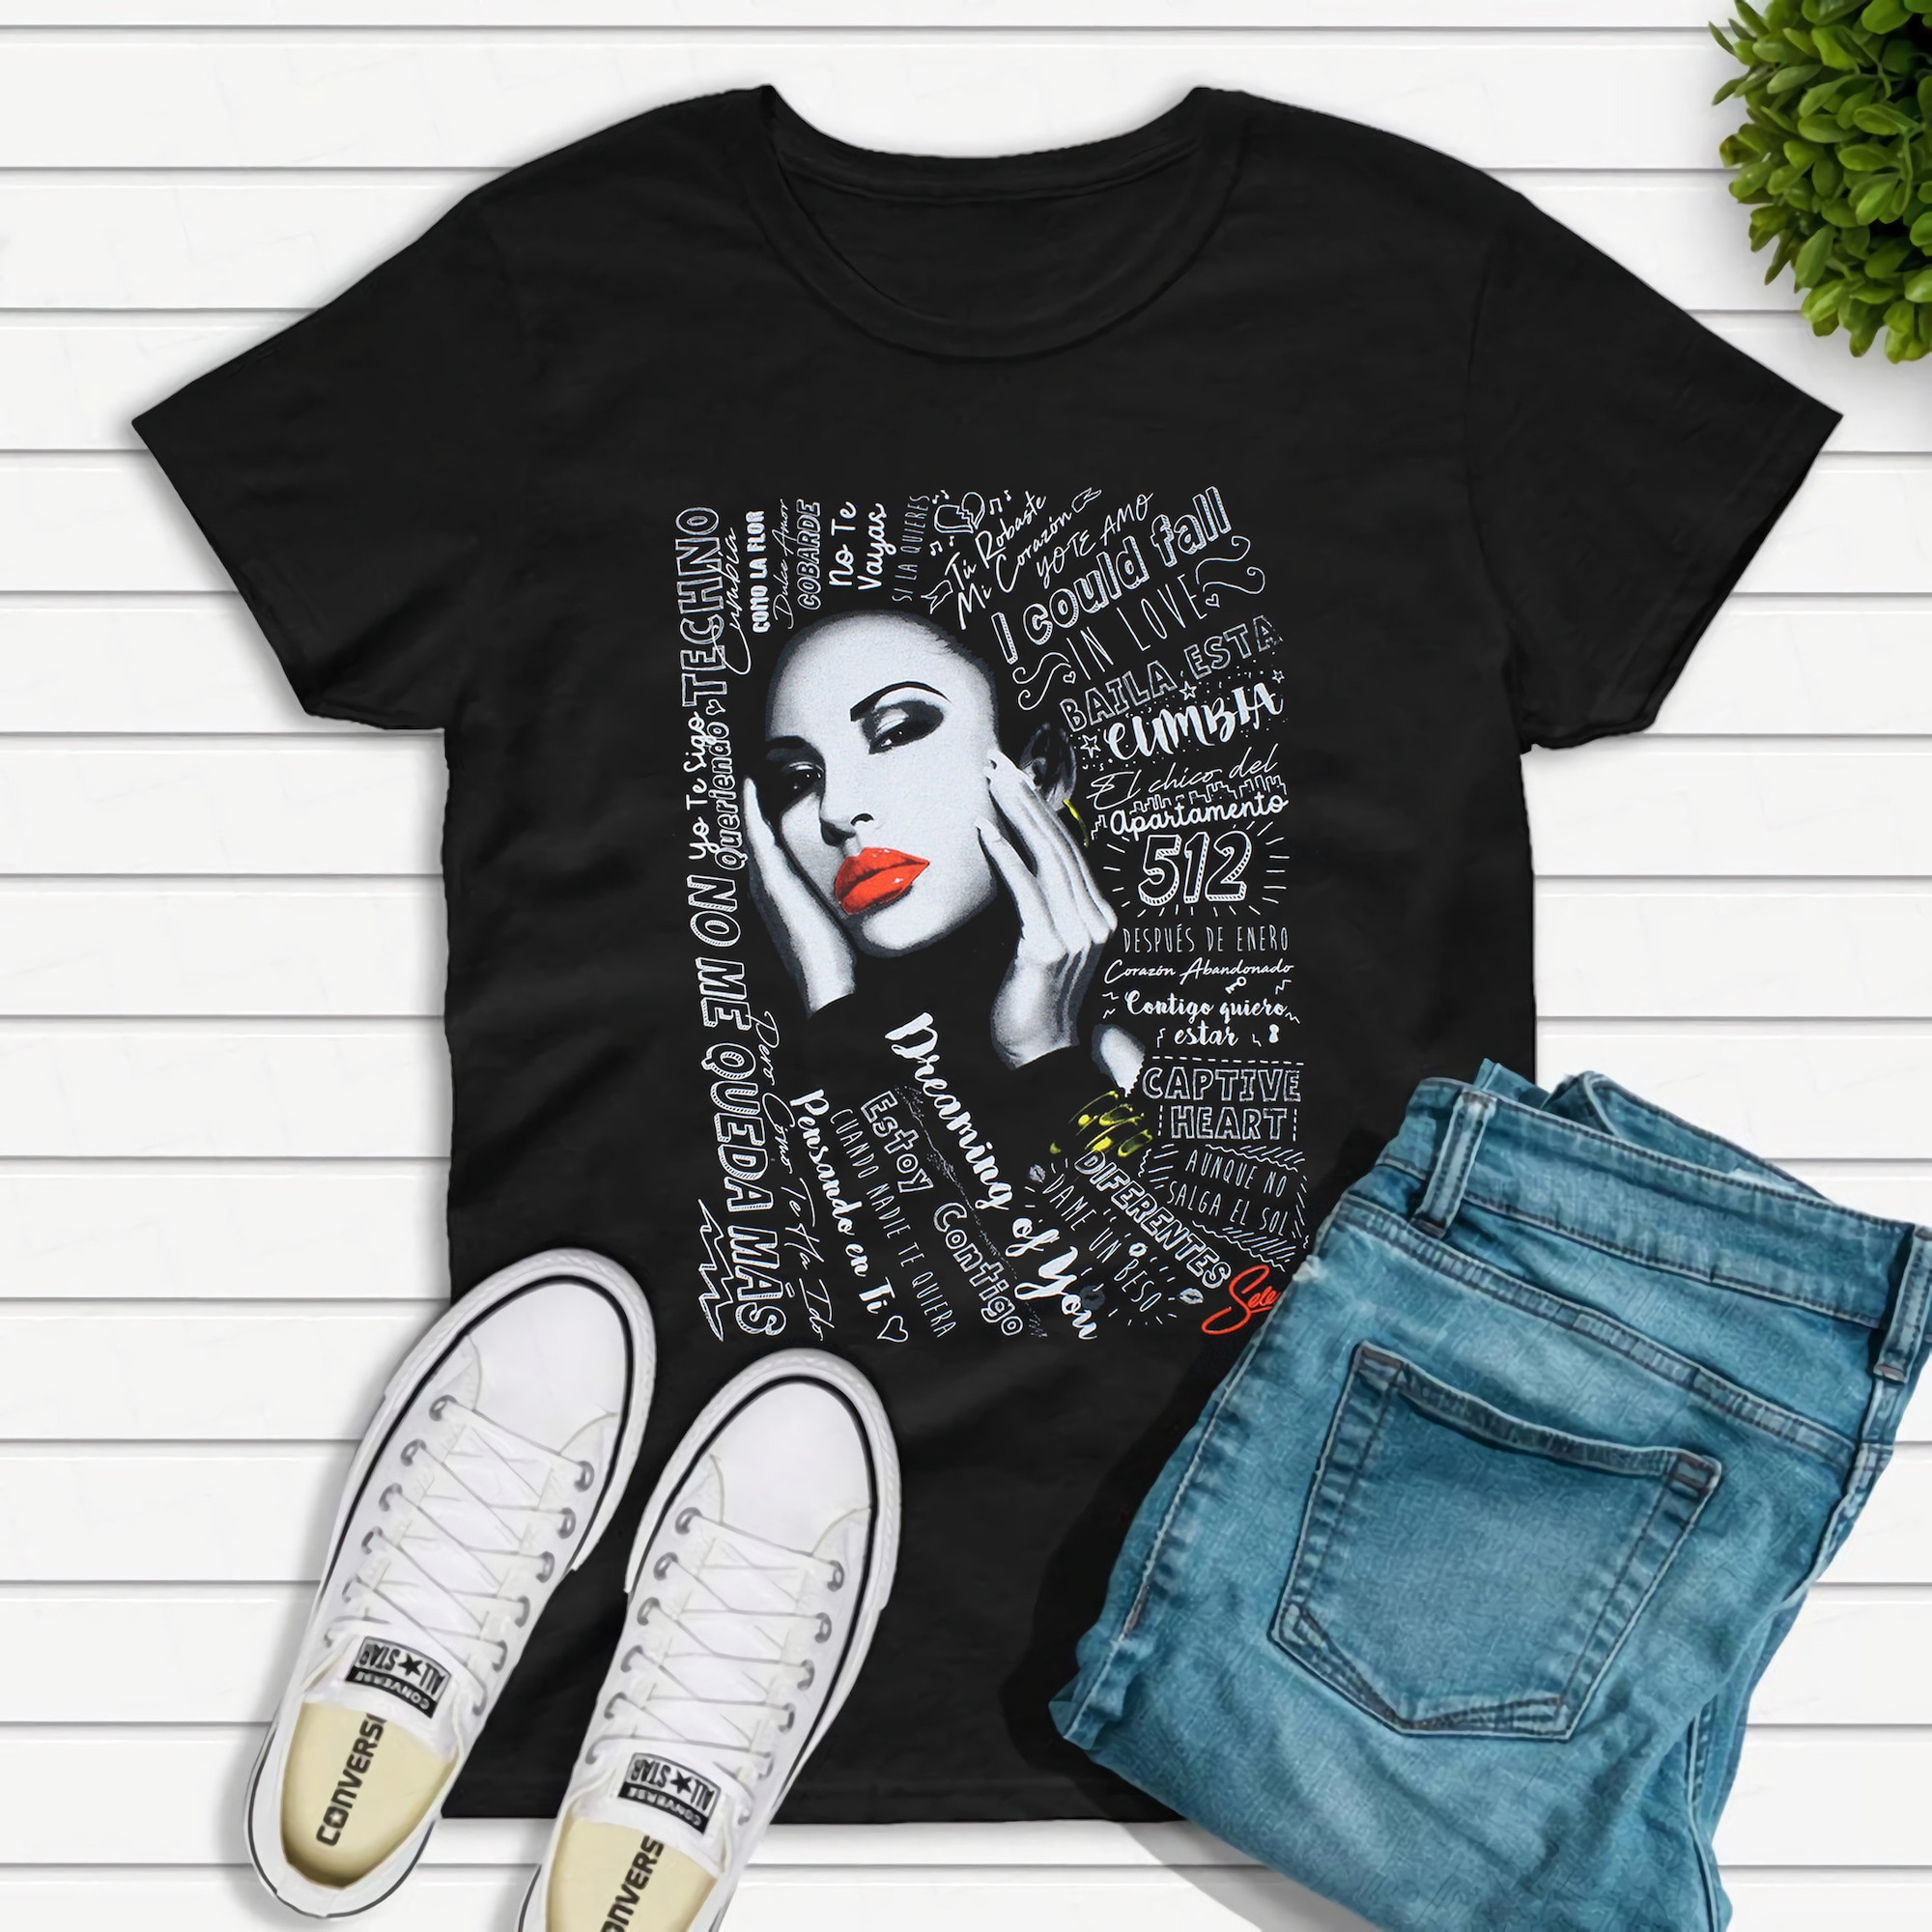 Selena Quintanilla Song Titles T-Shirt Unisex S-5XL, Selena Quintanilla Shirt Gift Fan, Selena Shirt, Selena Quintanilla Gifts